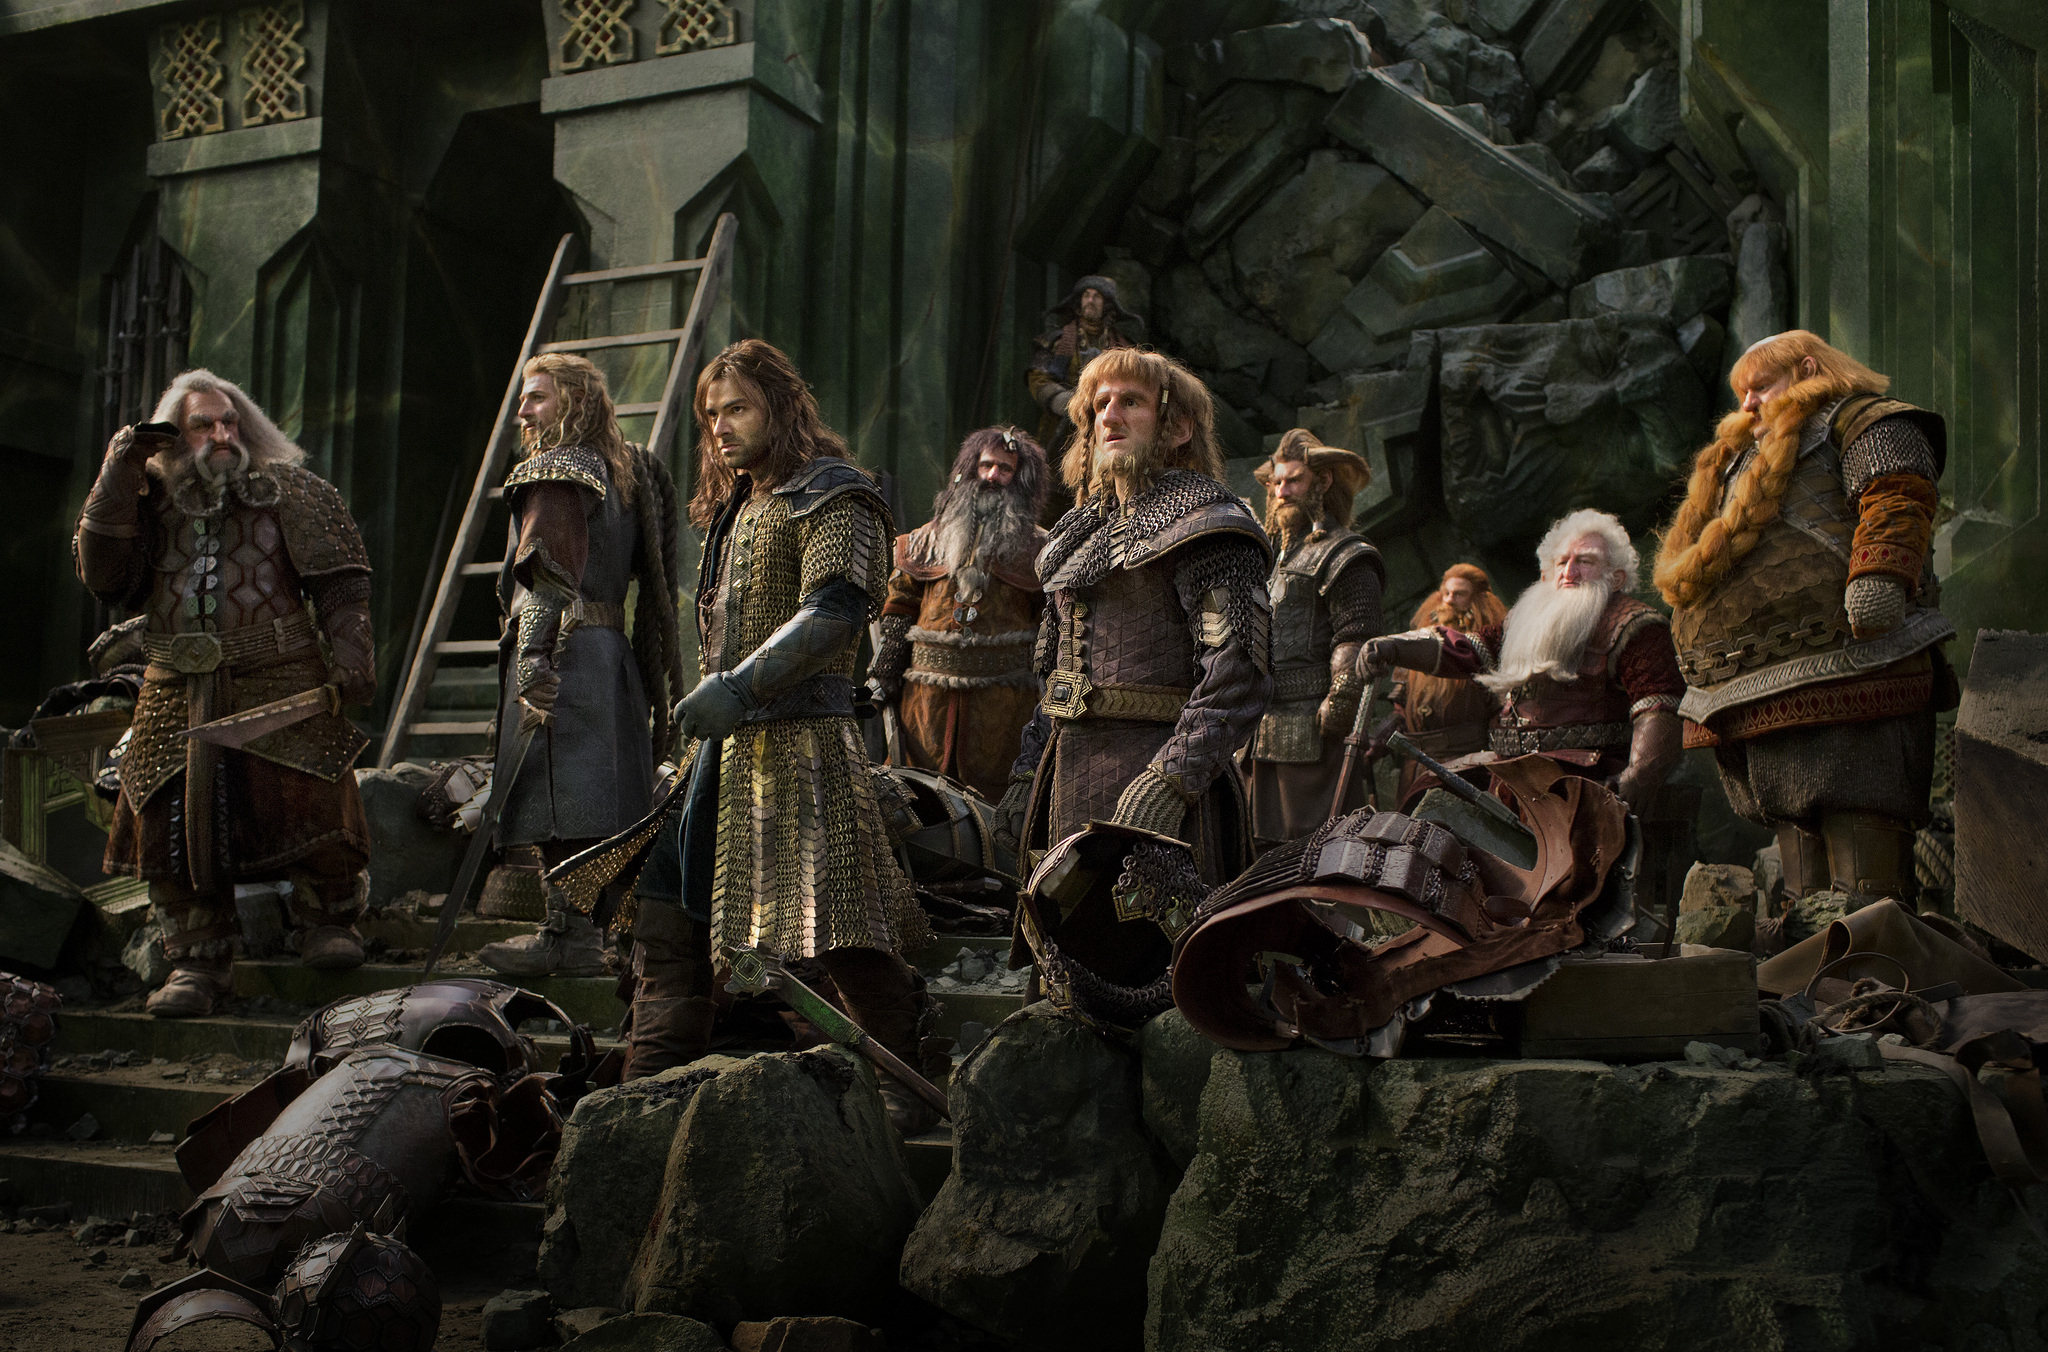 Banner Phim Người Hobbit 3: Đại chiến 5 cánh quân (The Hobbit 3: The Battle of the Five Armies)